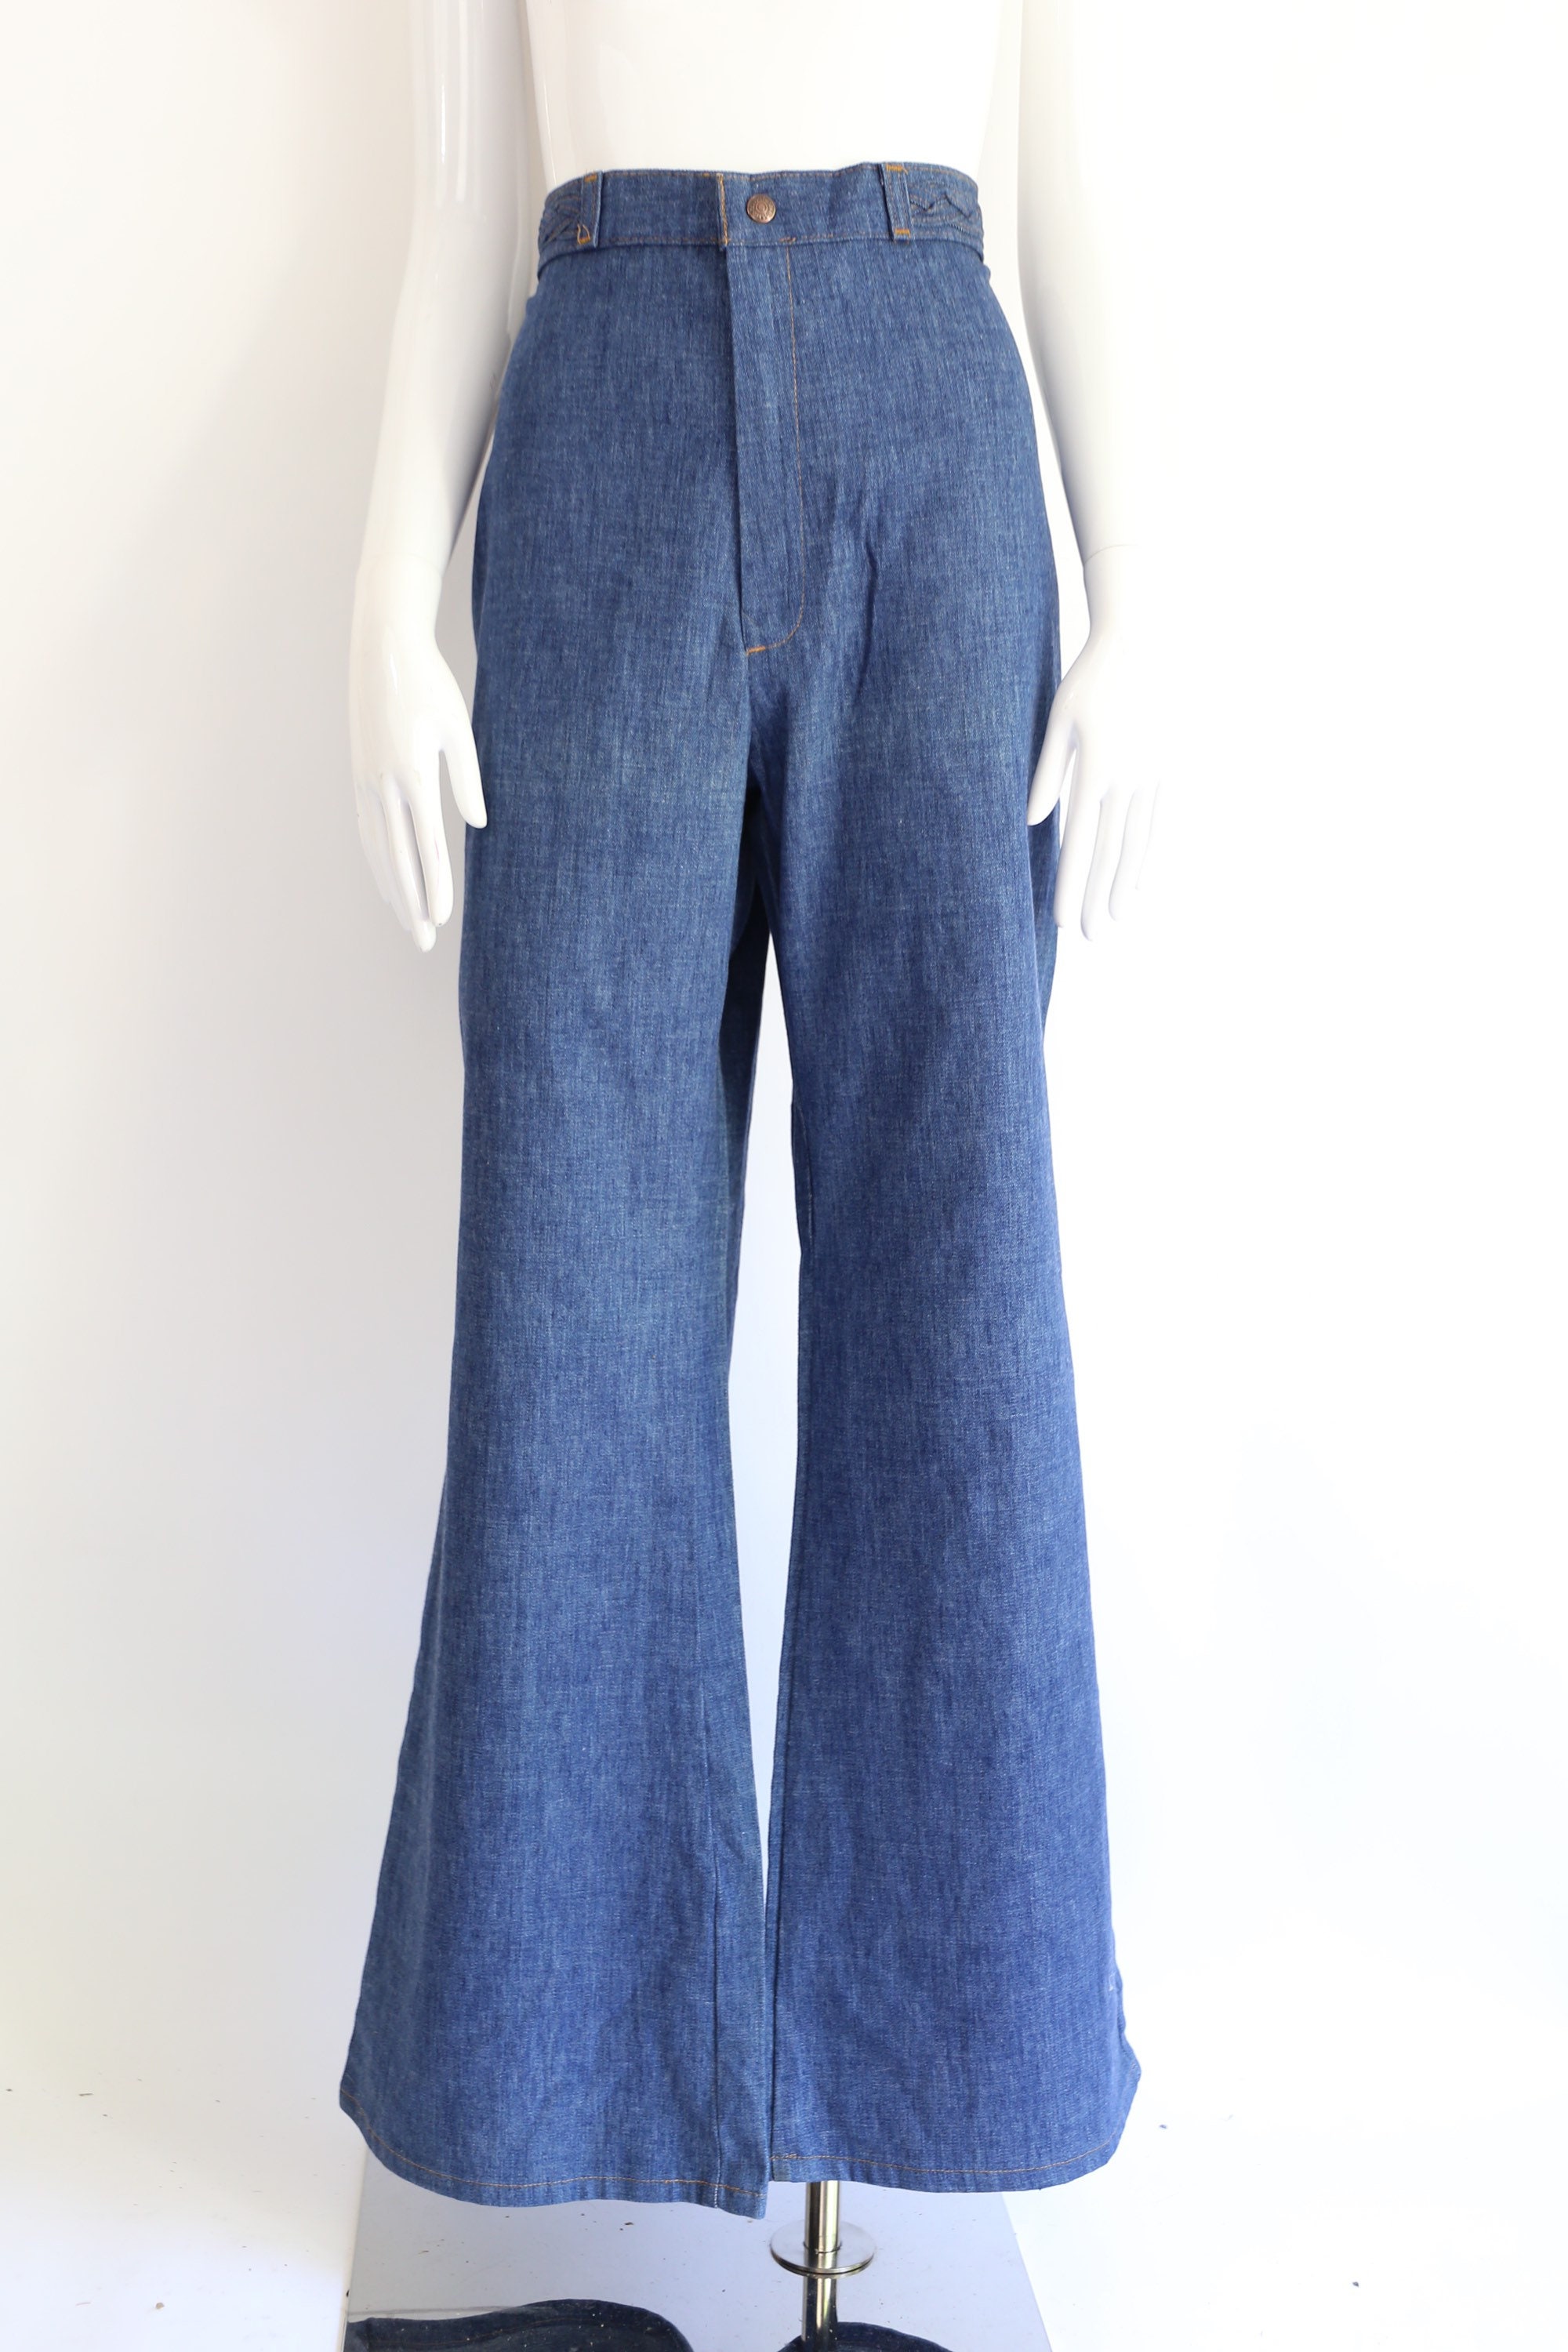 70s LEVIS Orange Tab hi rise jeans bells 16 / vintage 1970s medium wash ...